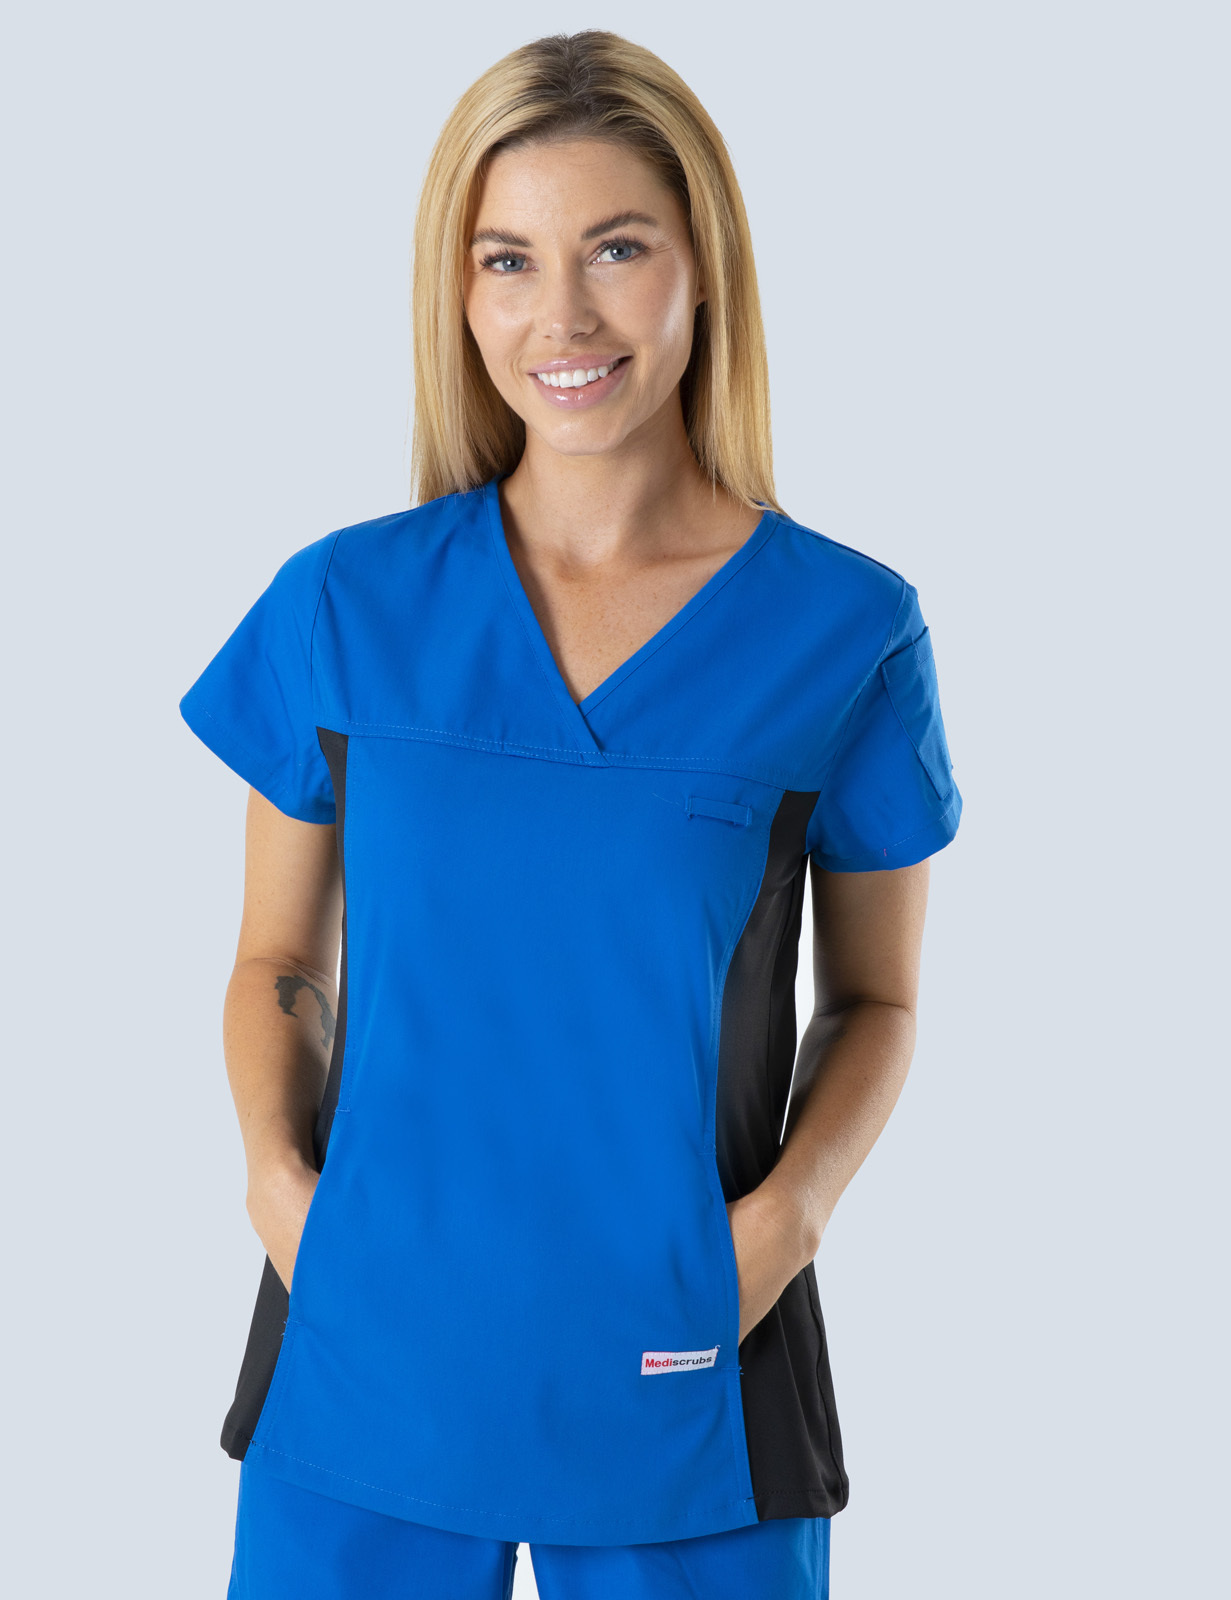 Palm Island Hospital - Nursing (Women's Fit Spandex Scrub Top in Royal incl Logos)